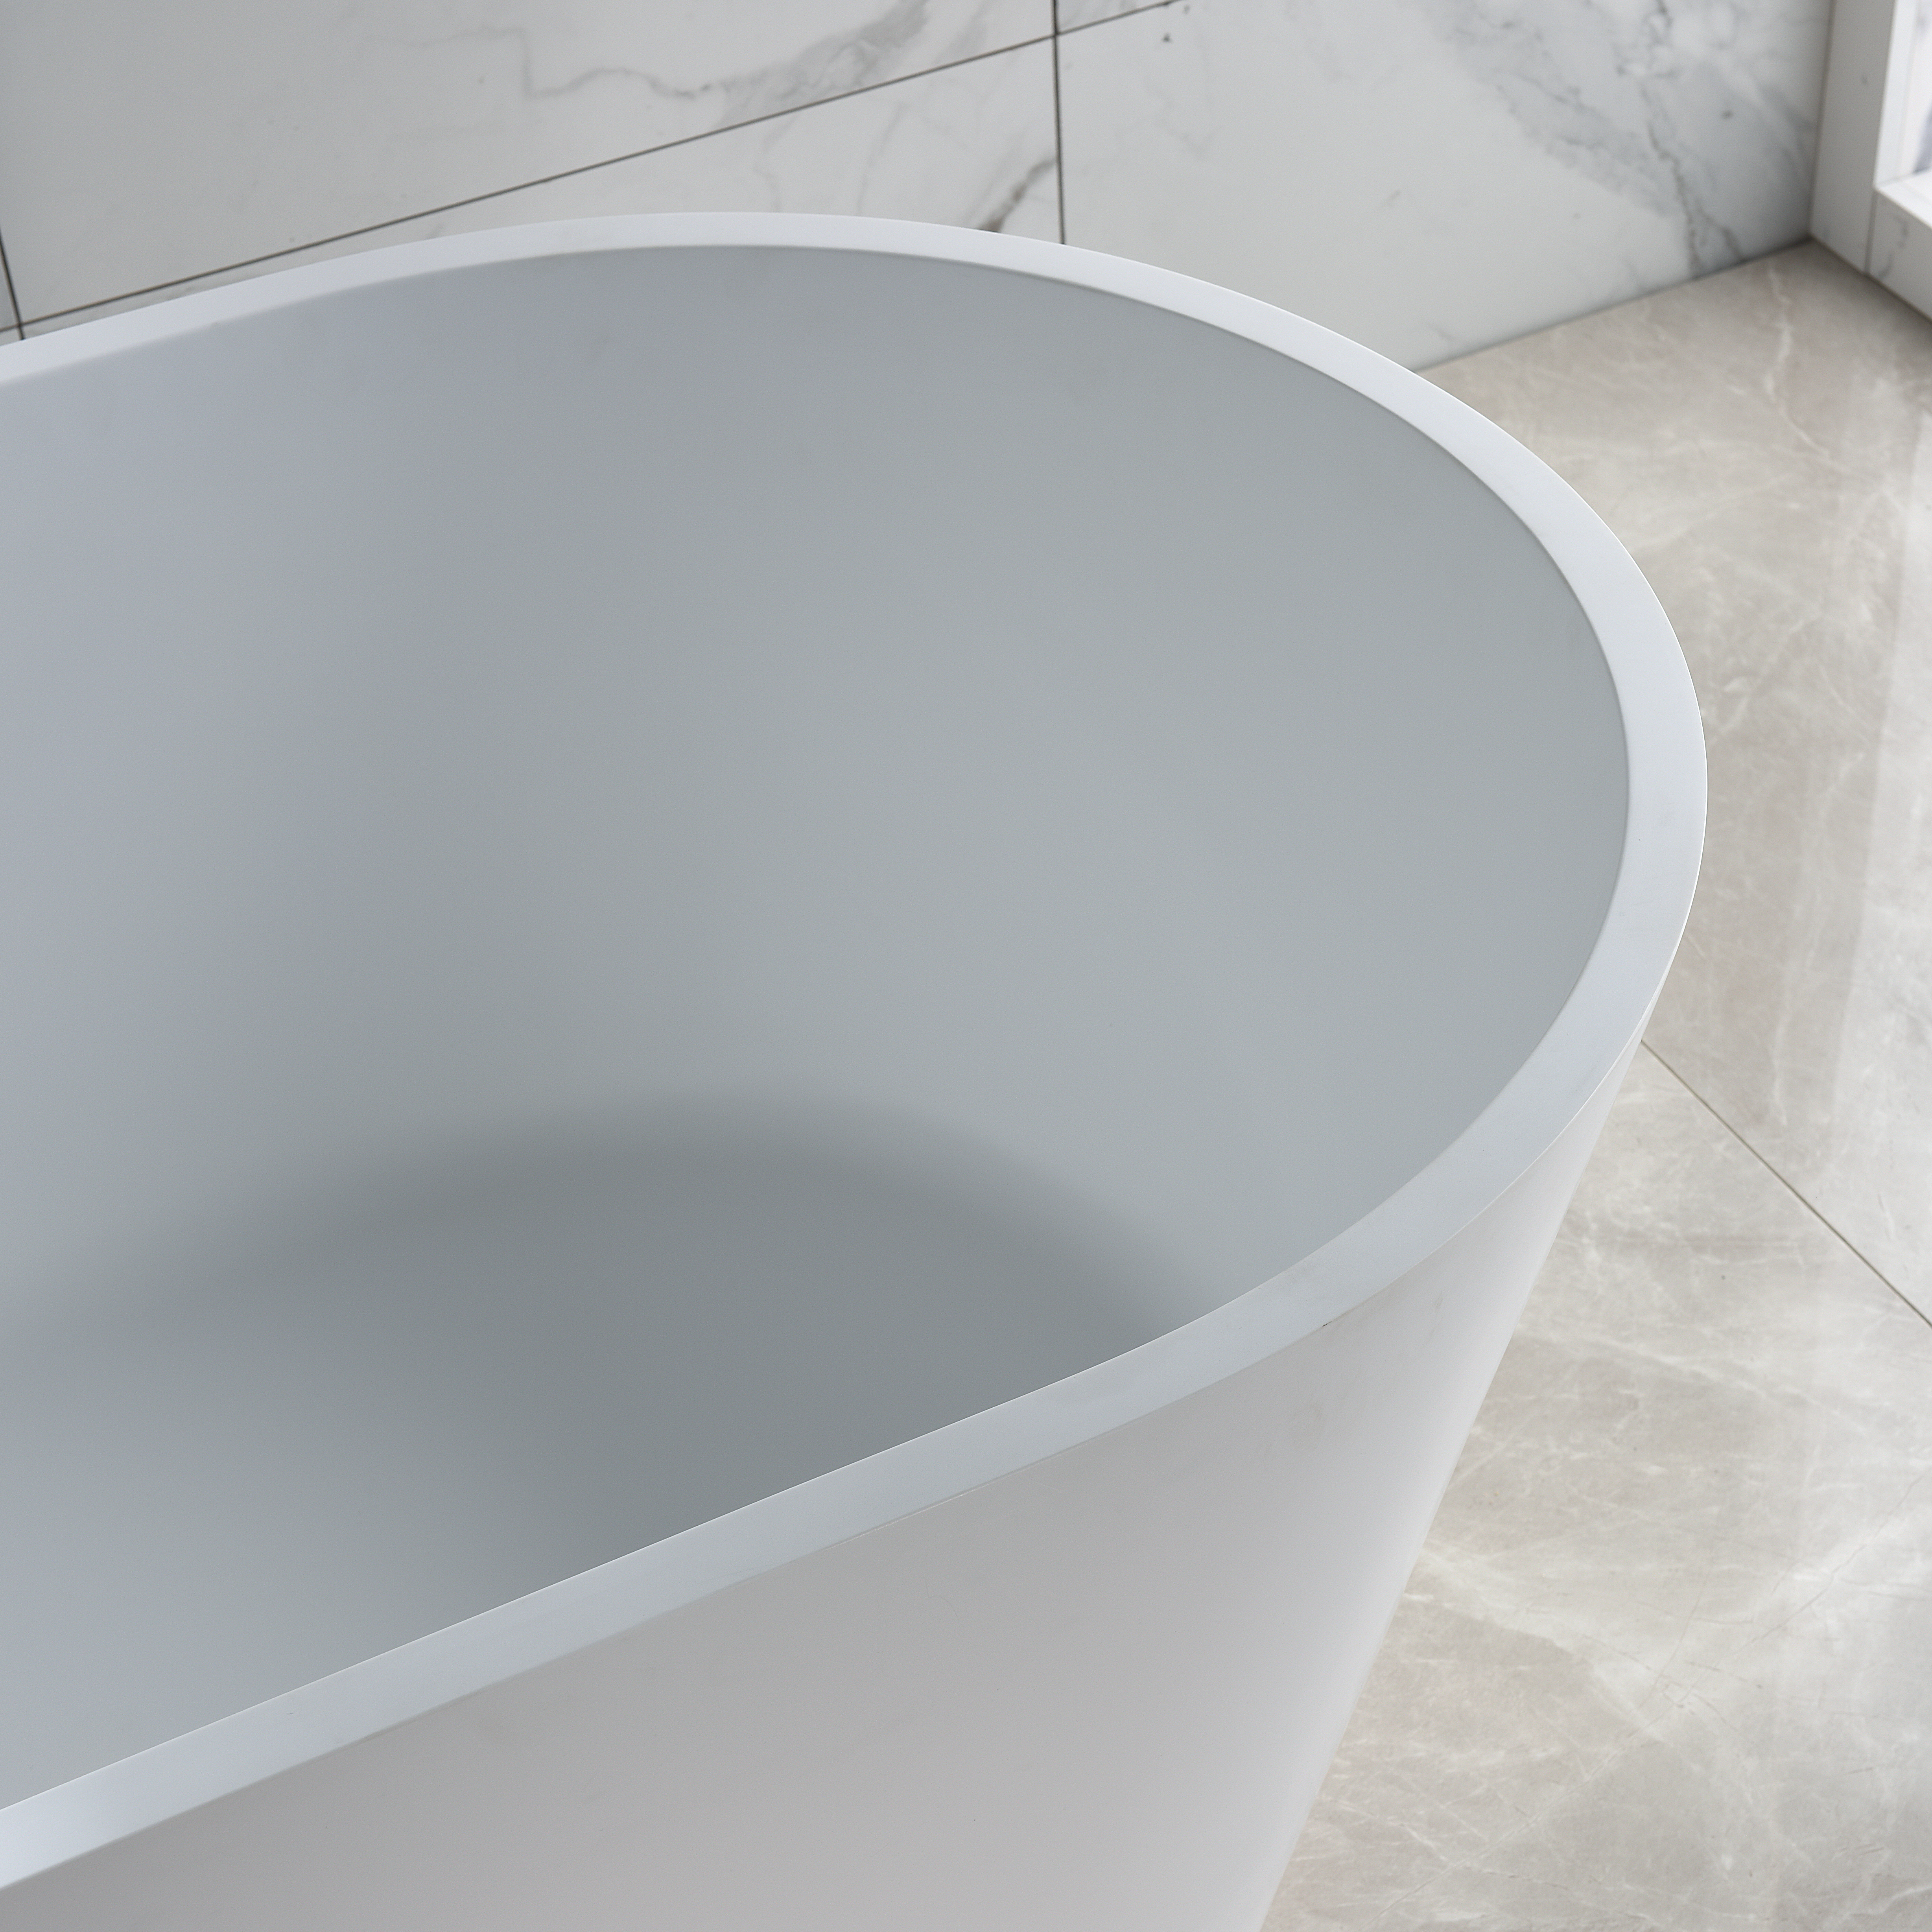 Oval shape free standing solid surface matt white bathtub